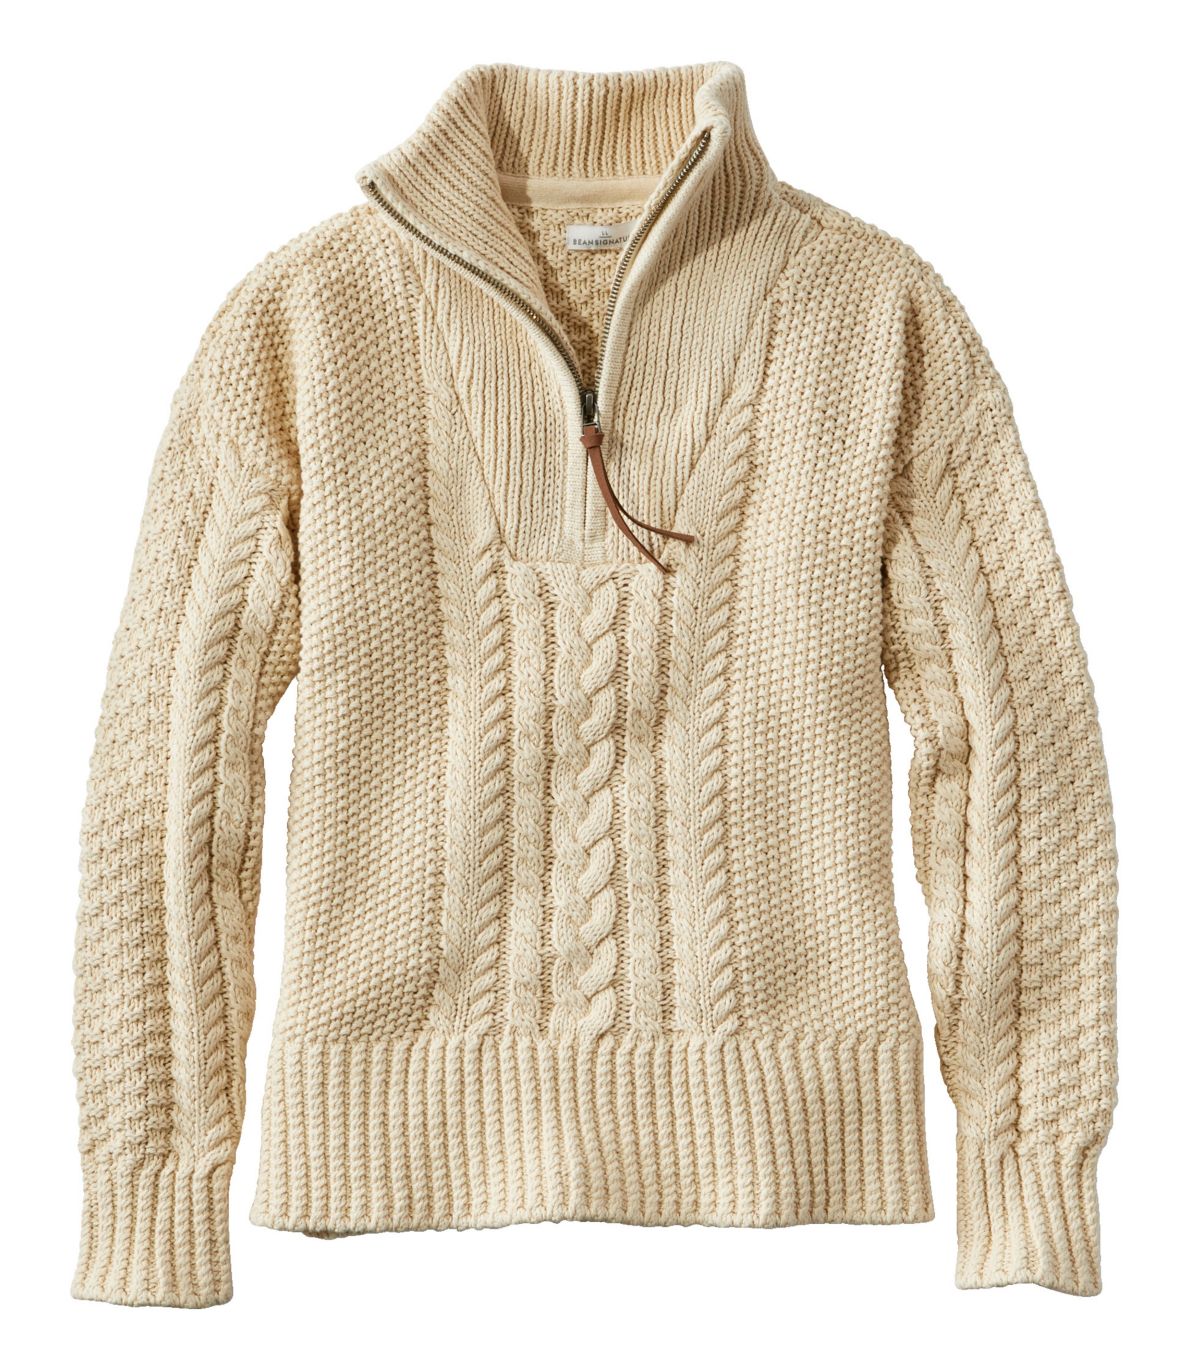 Women's Signature Cotton Fisherman Sweater, Quarter-Zip